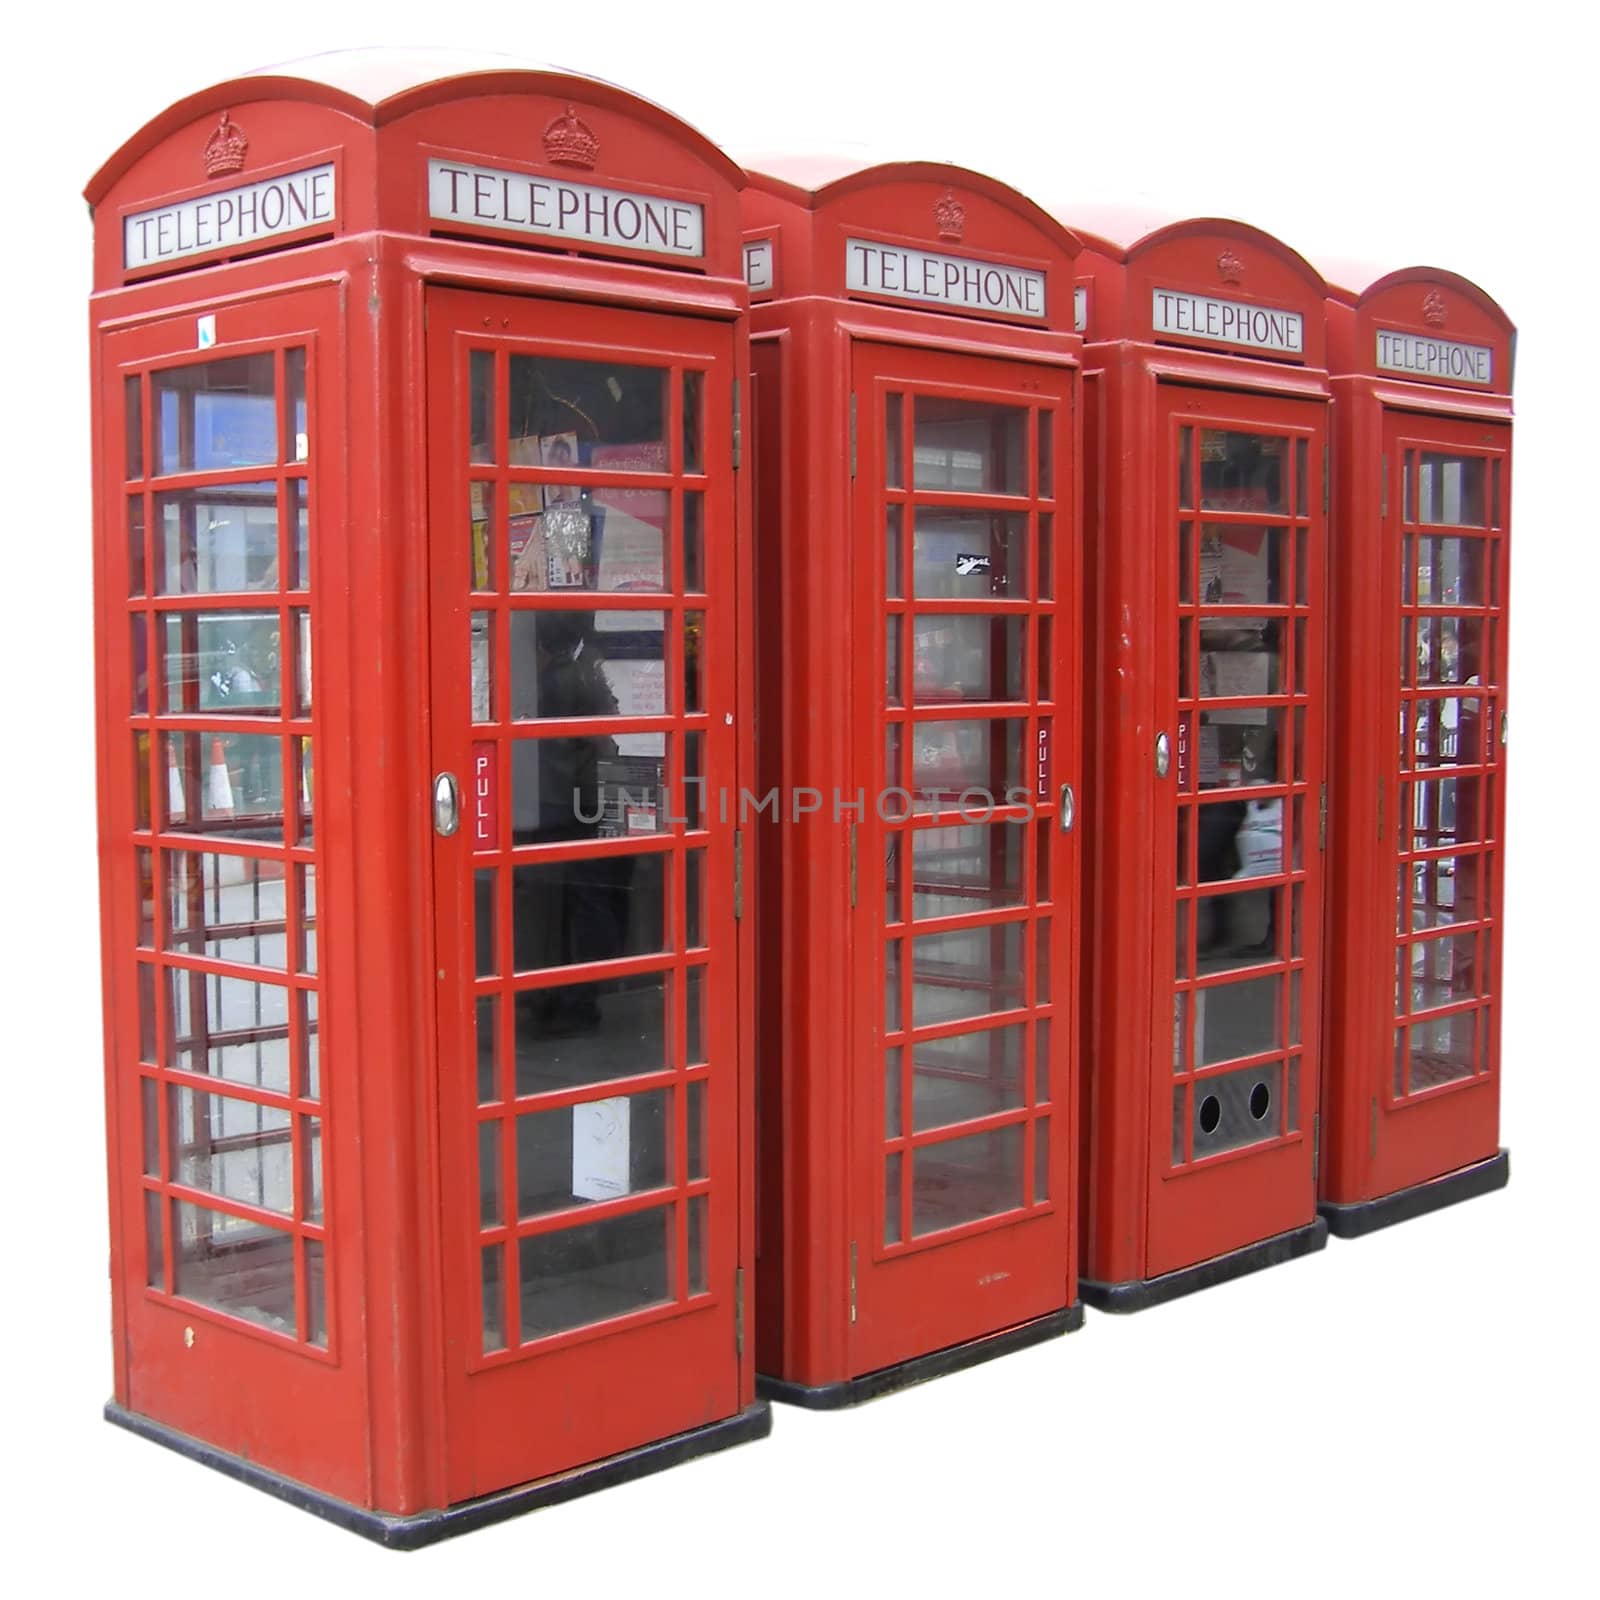 Red Telephone Box London